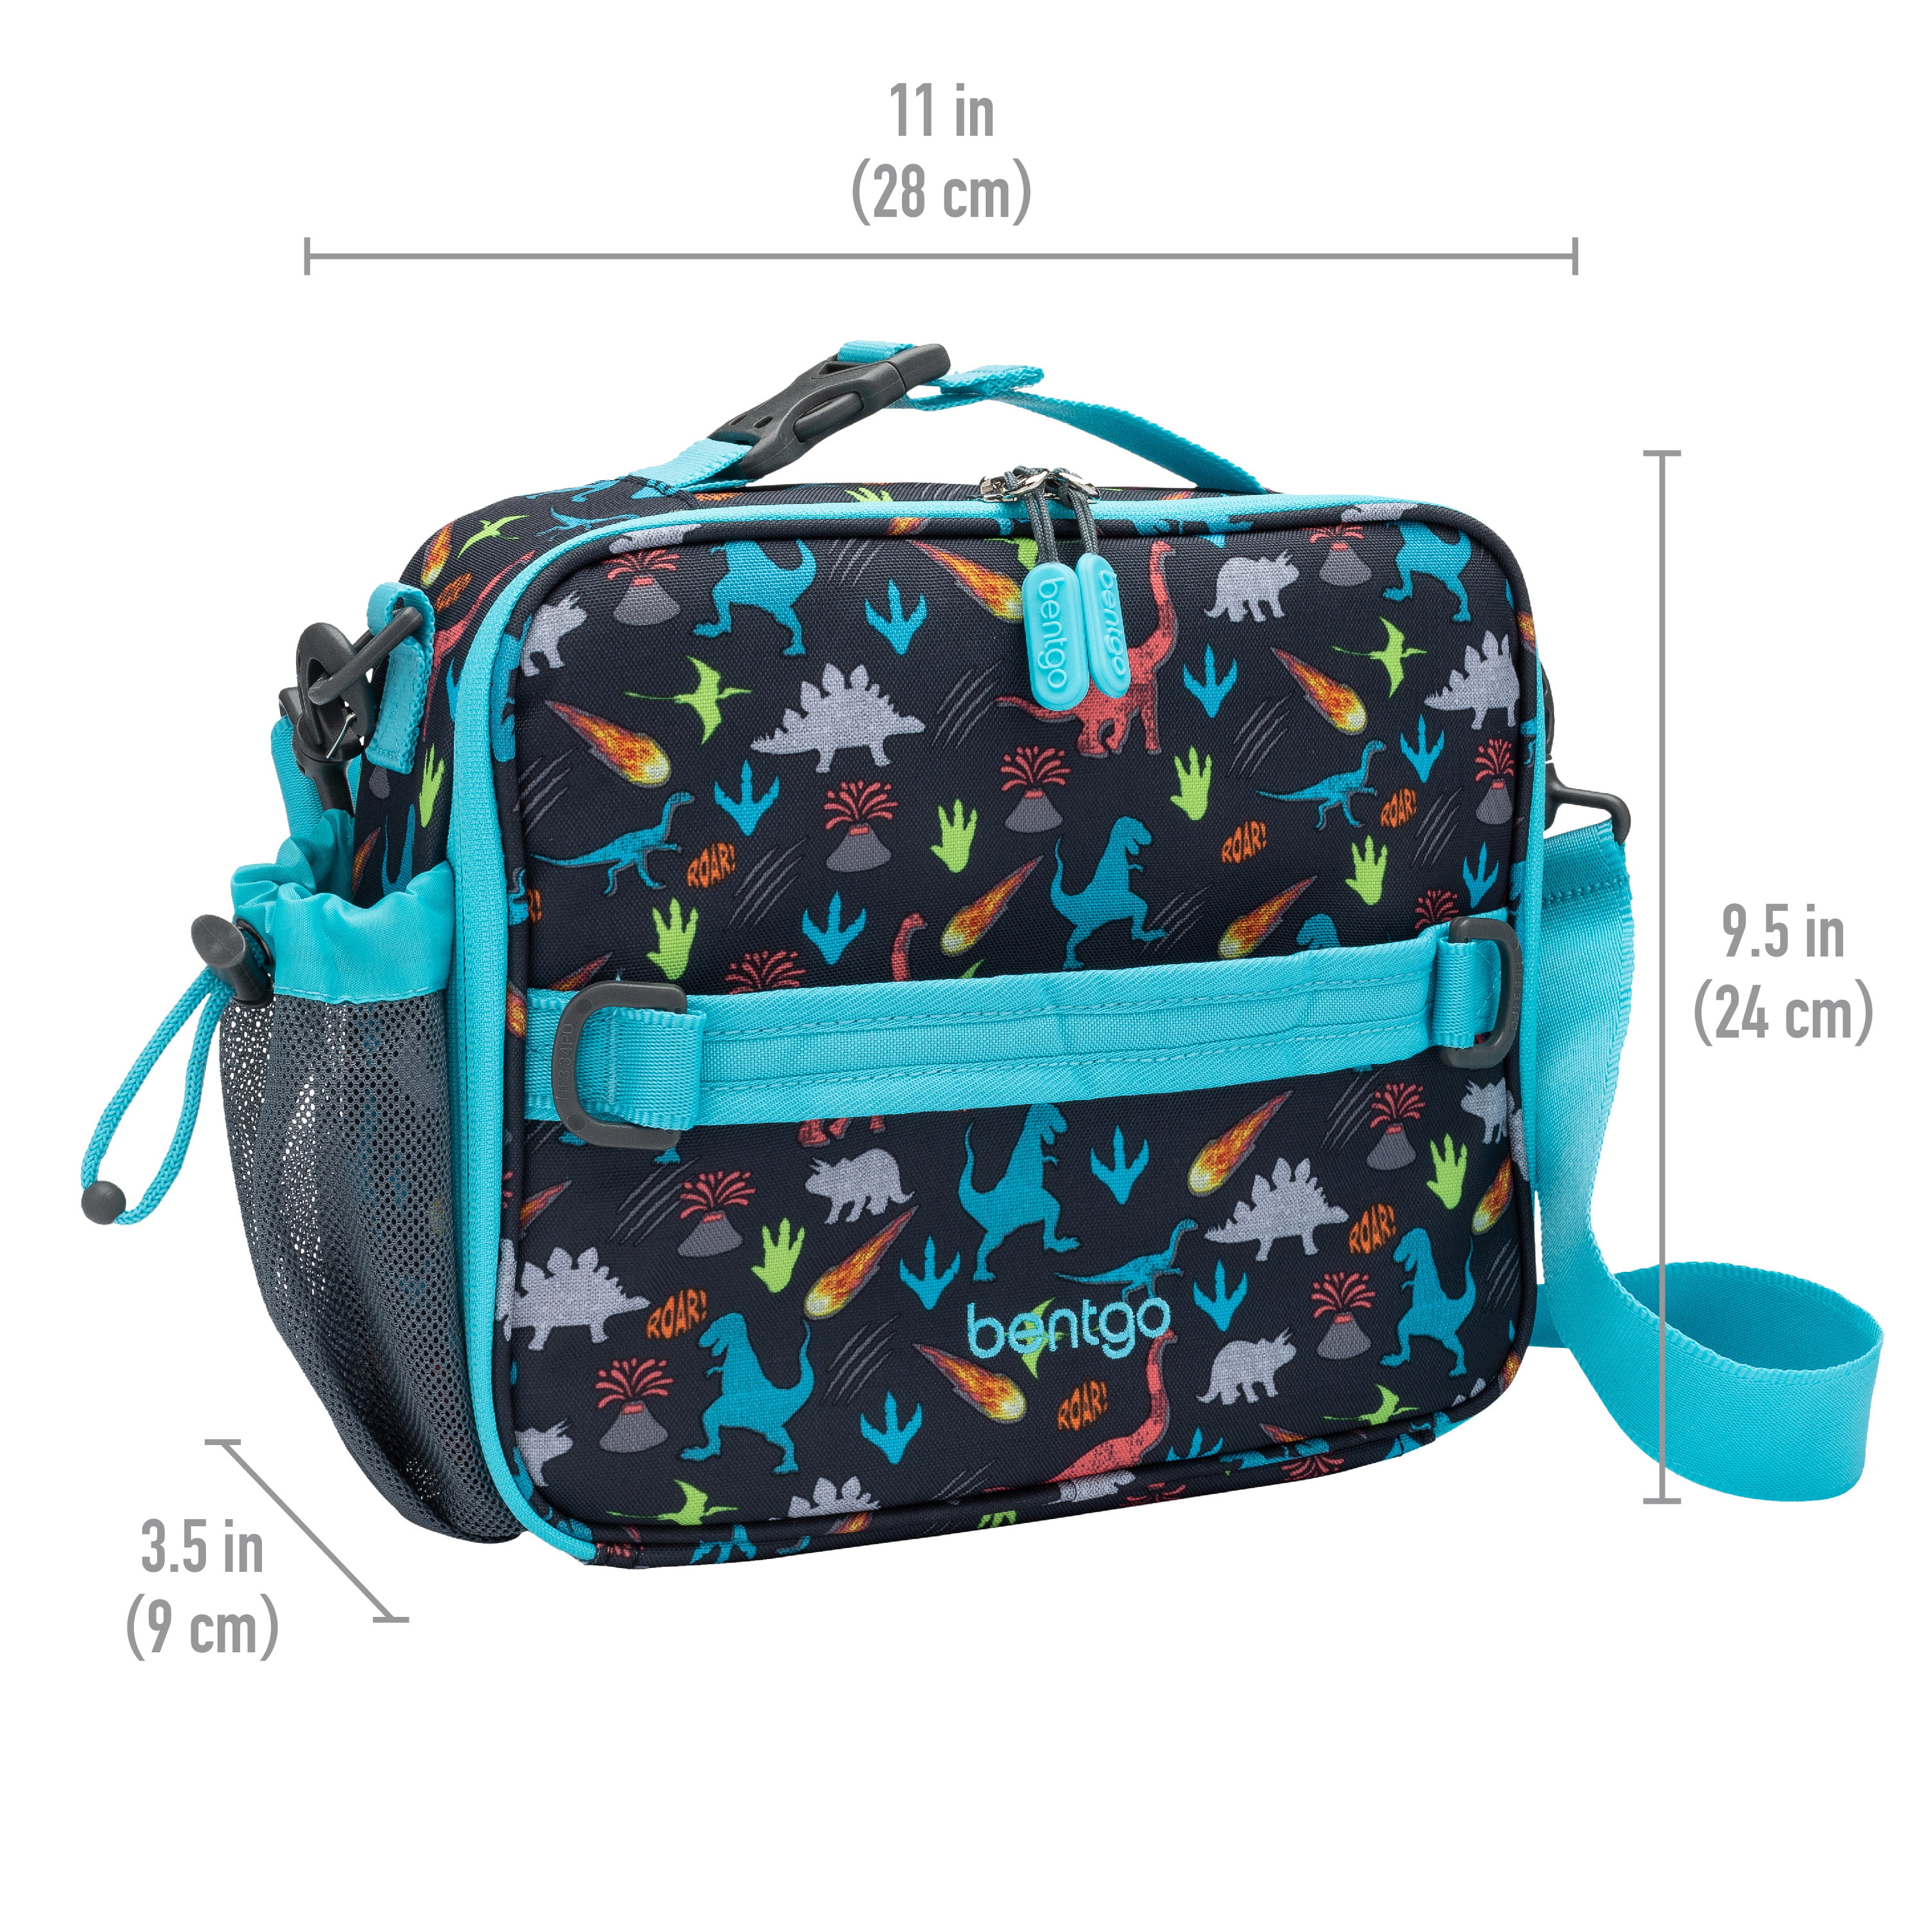 Bentgo® Kids Lunch Bag - Durable, Double Insulated, Water-Resistant Fabric,  Interior & Exterior Zipp…See more Bentgo® Kids Lunch Bag - Durable, Double